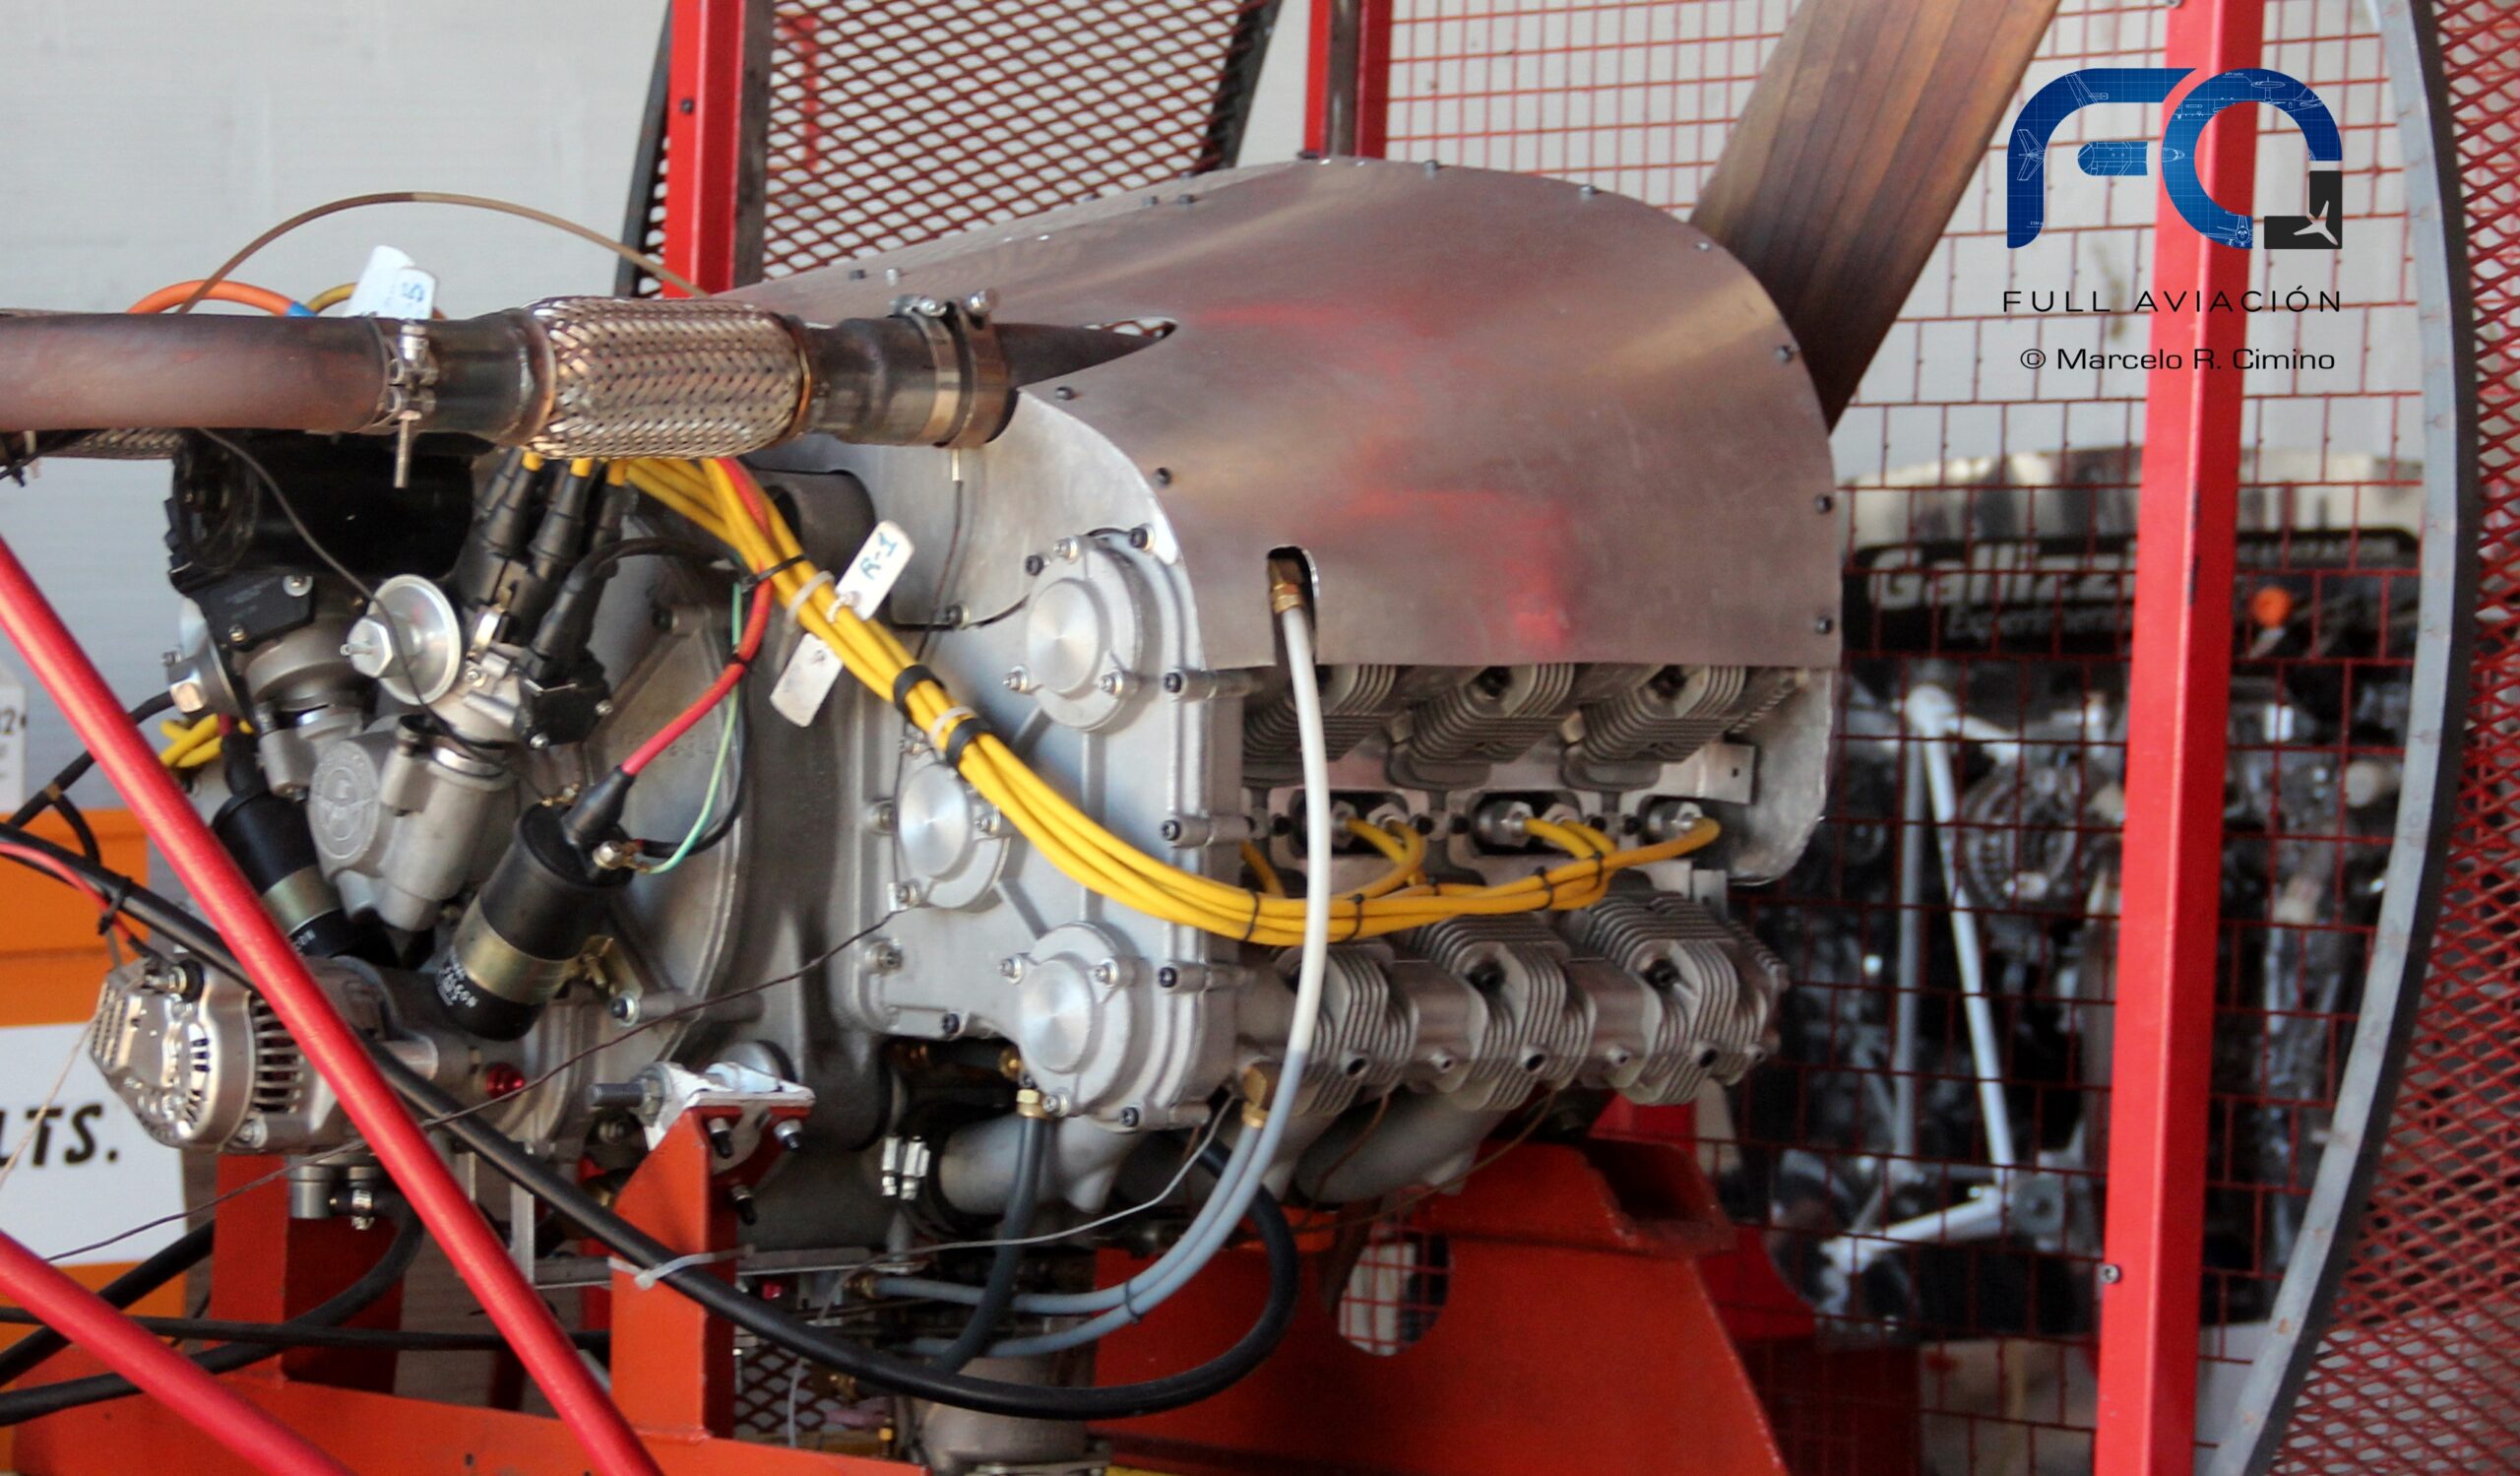 2560px x 1499px - PresentaciÃ³n del motor prototipo TM-2600-R | Full AviaciÃ³n